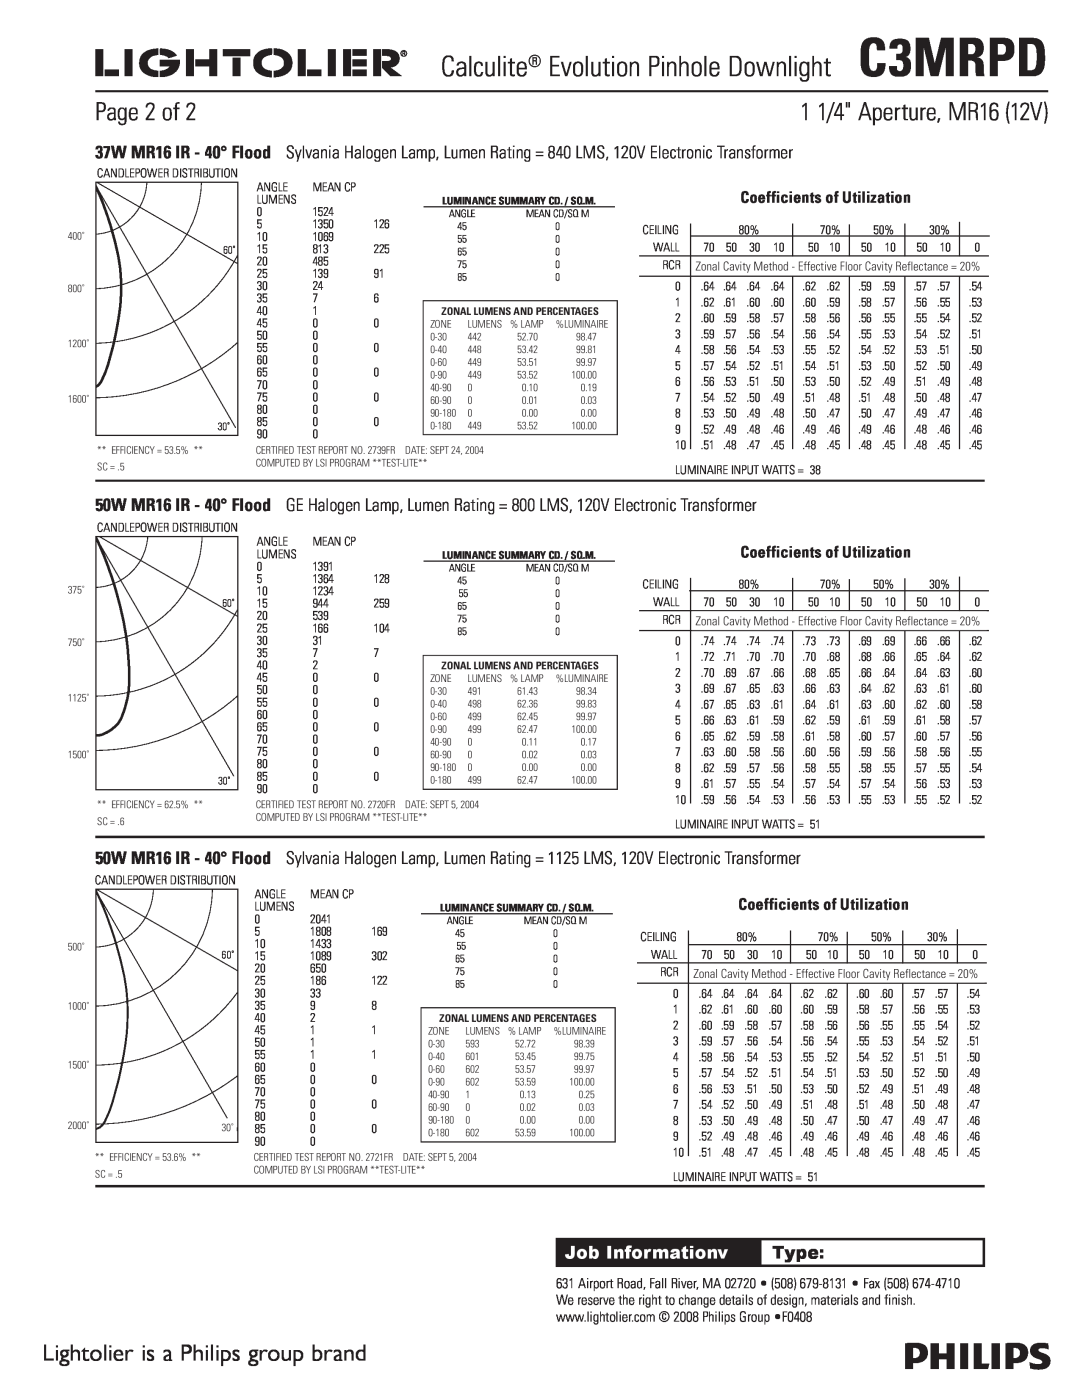 Lightolier Calculite Evolution Pinhole DownlightC3MRPD, Page 2 of, Job Informationv, 1 1/4 Aperture, MR16, Type 